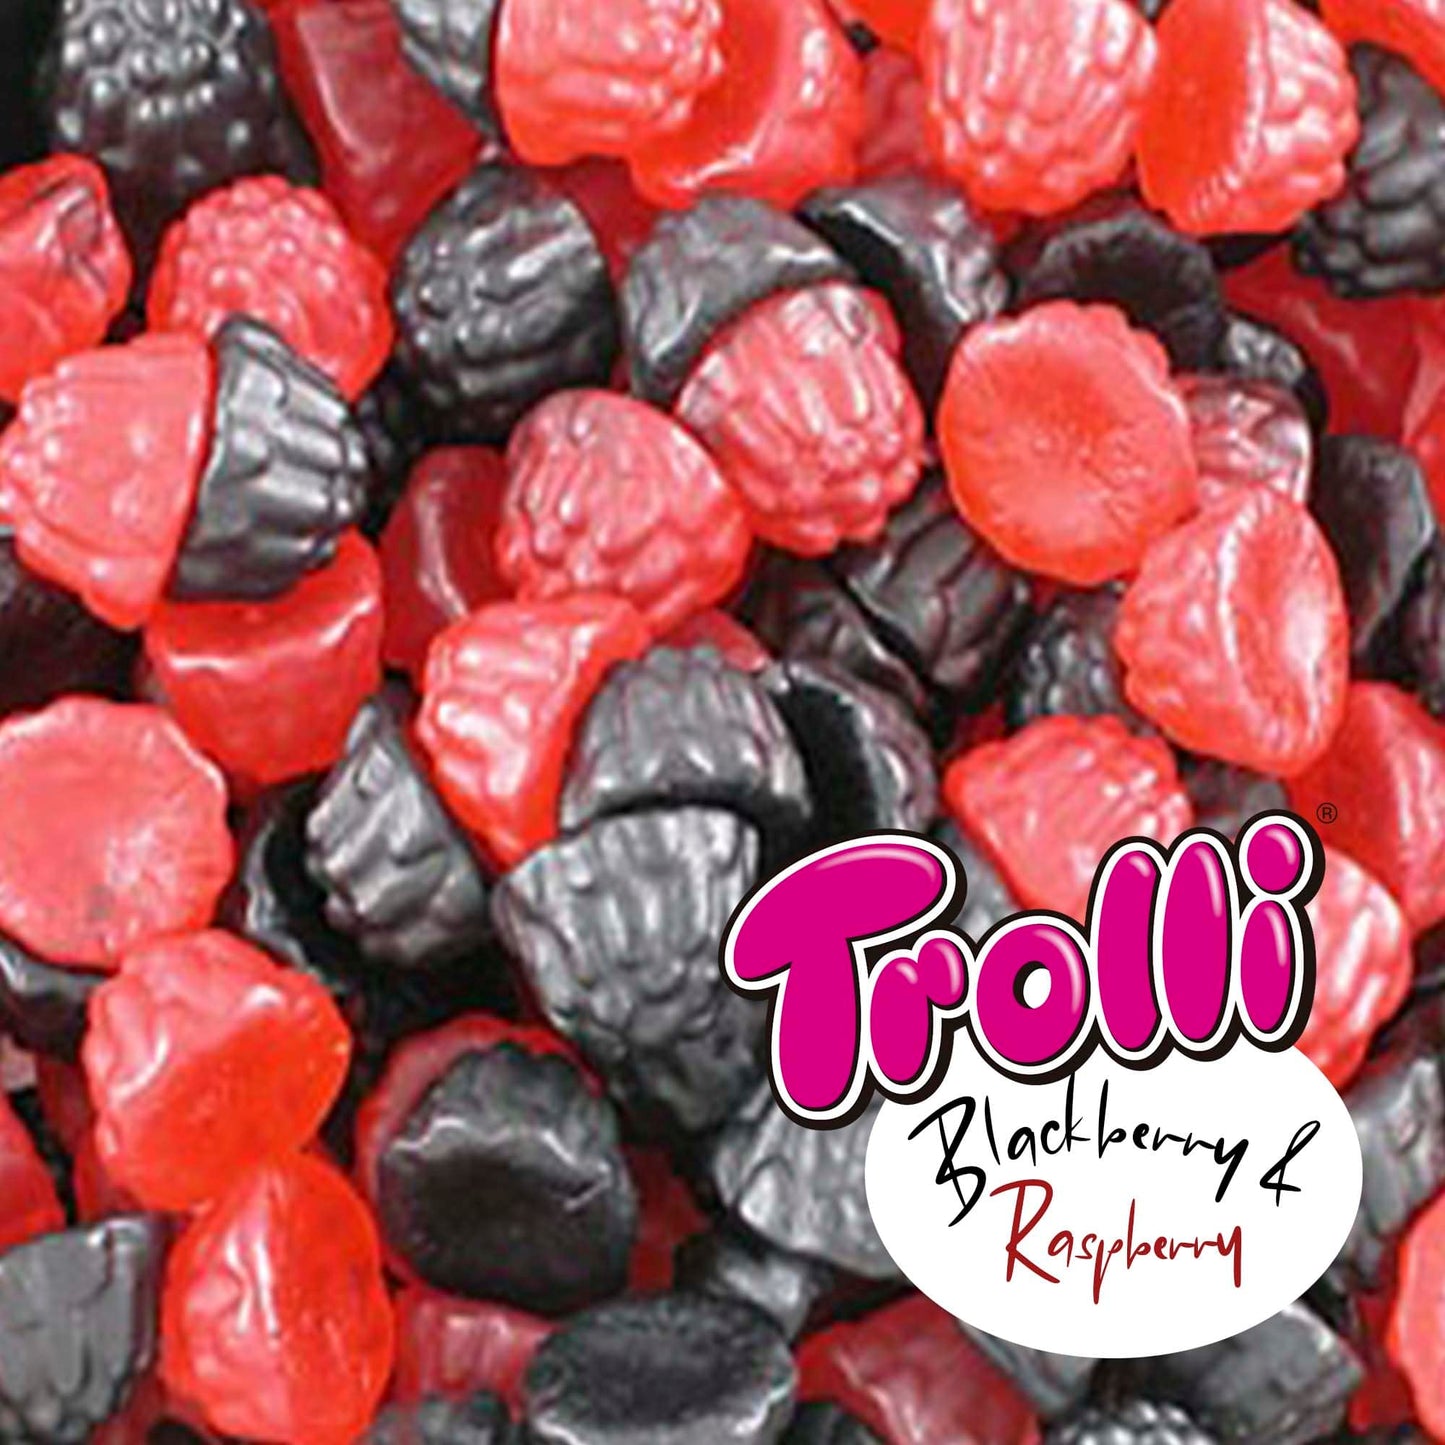 Freeze Dried Raspberries Blackberries Freeze Dried Candy Lollies Sweets Treats Ice Cream